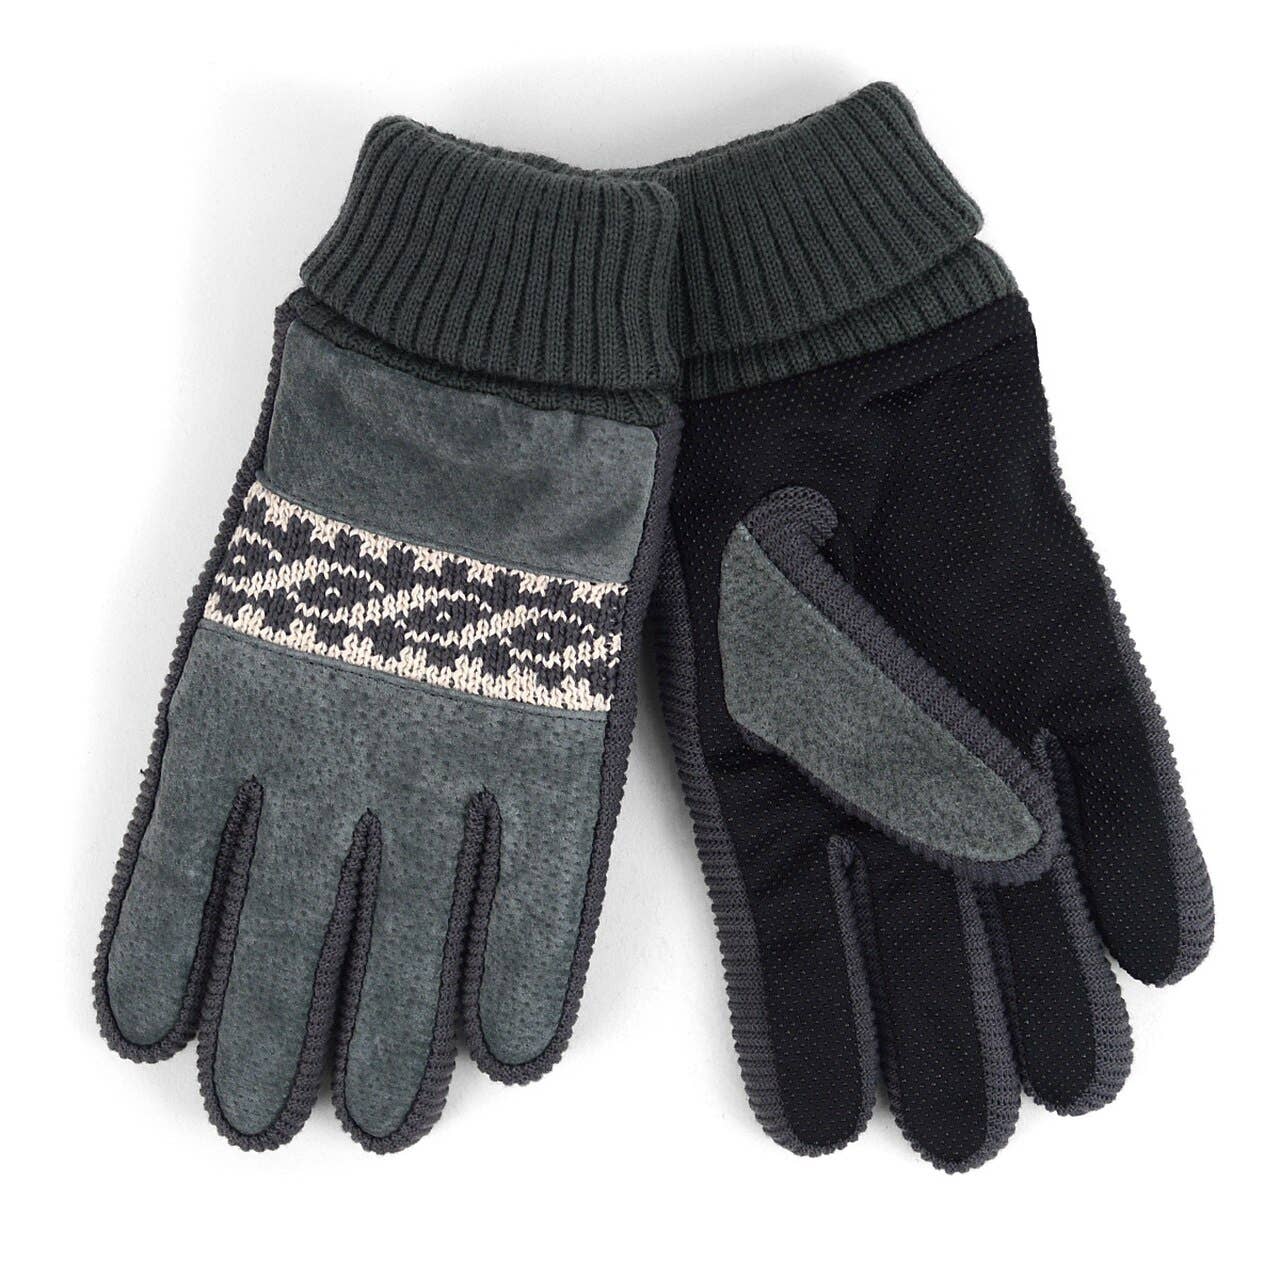 Men's Genuine Leather Non Slip Grip Winter Gloves: Black / L/XL